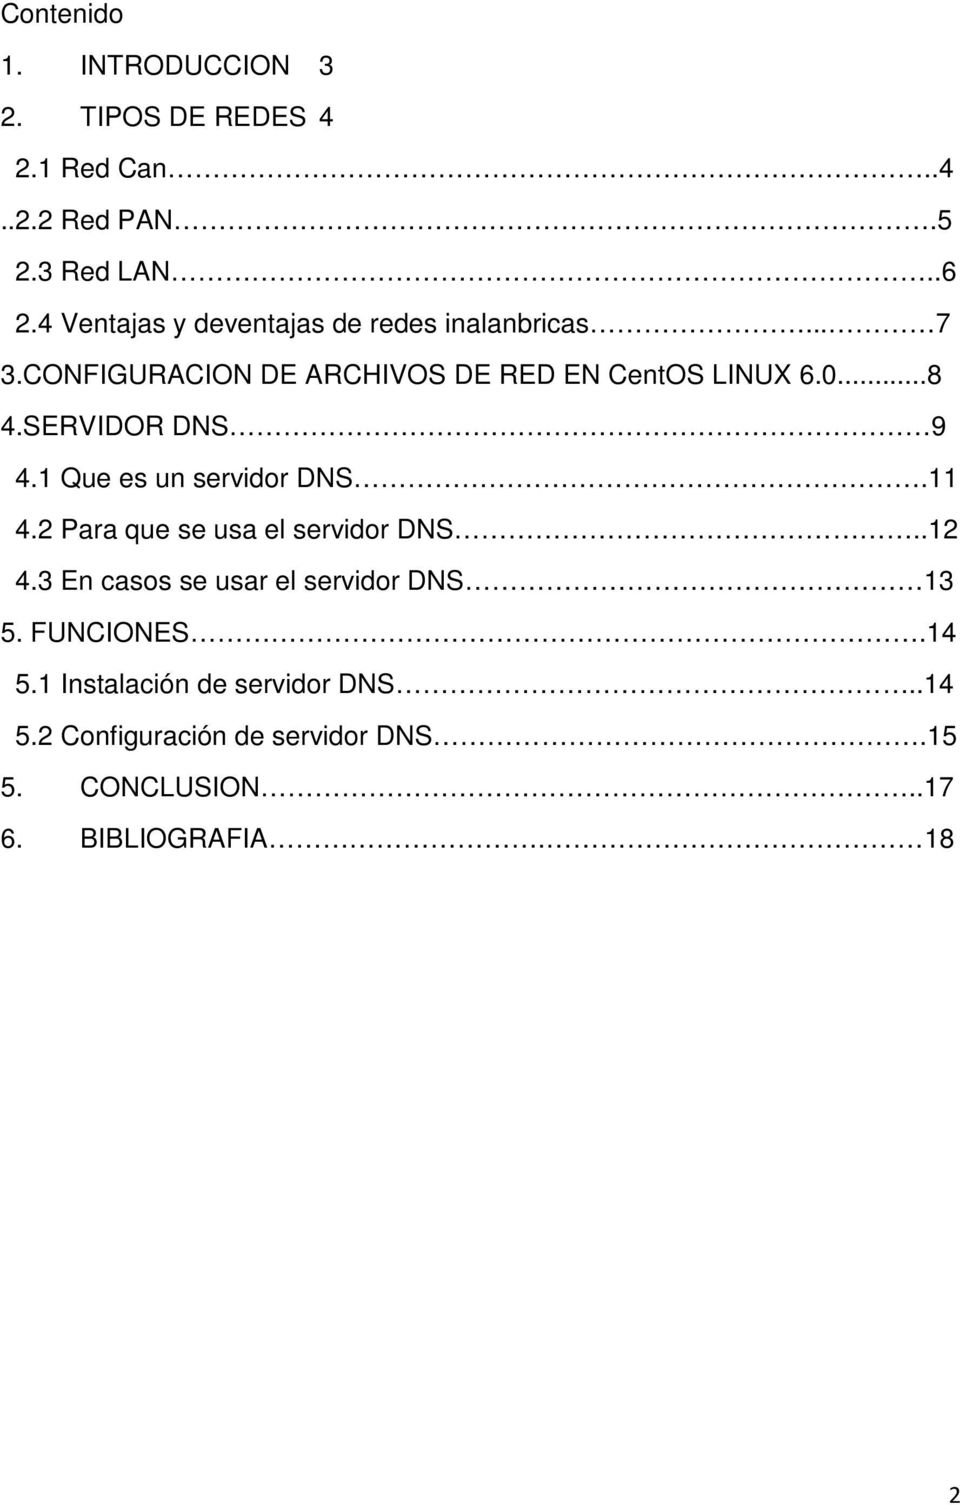 SERVIDOR DNS 9 4.1 Que es un servidor DNS.11 4.2 Para que se usa el servidor DNS..12 4.